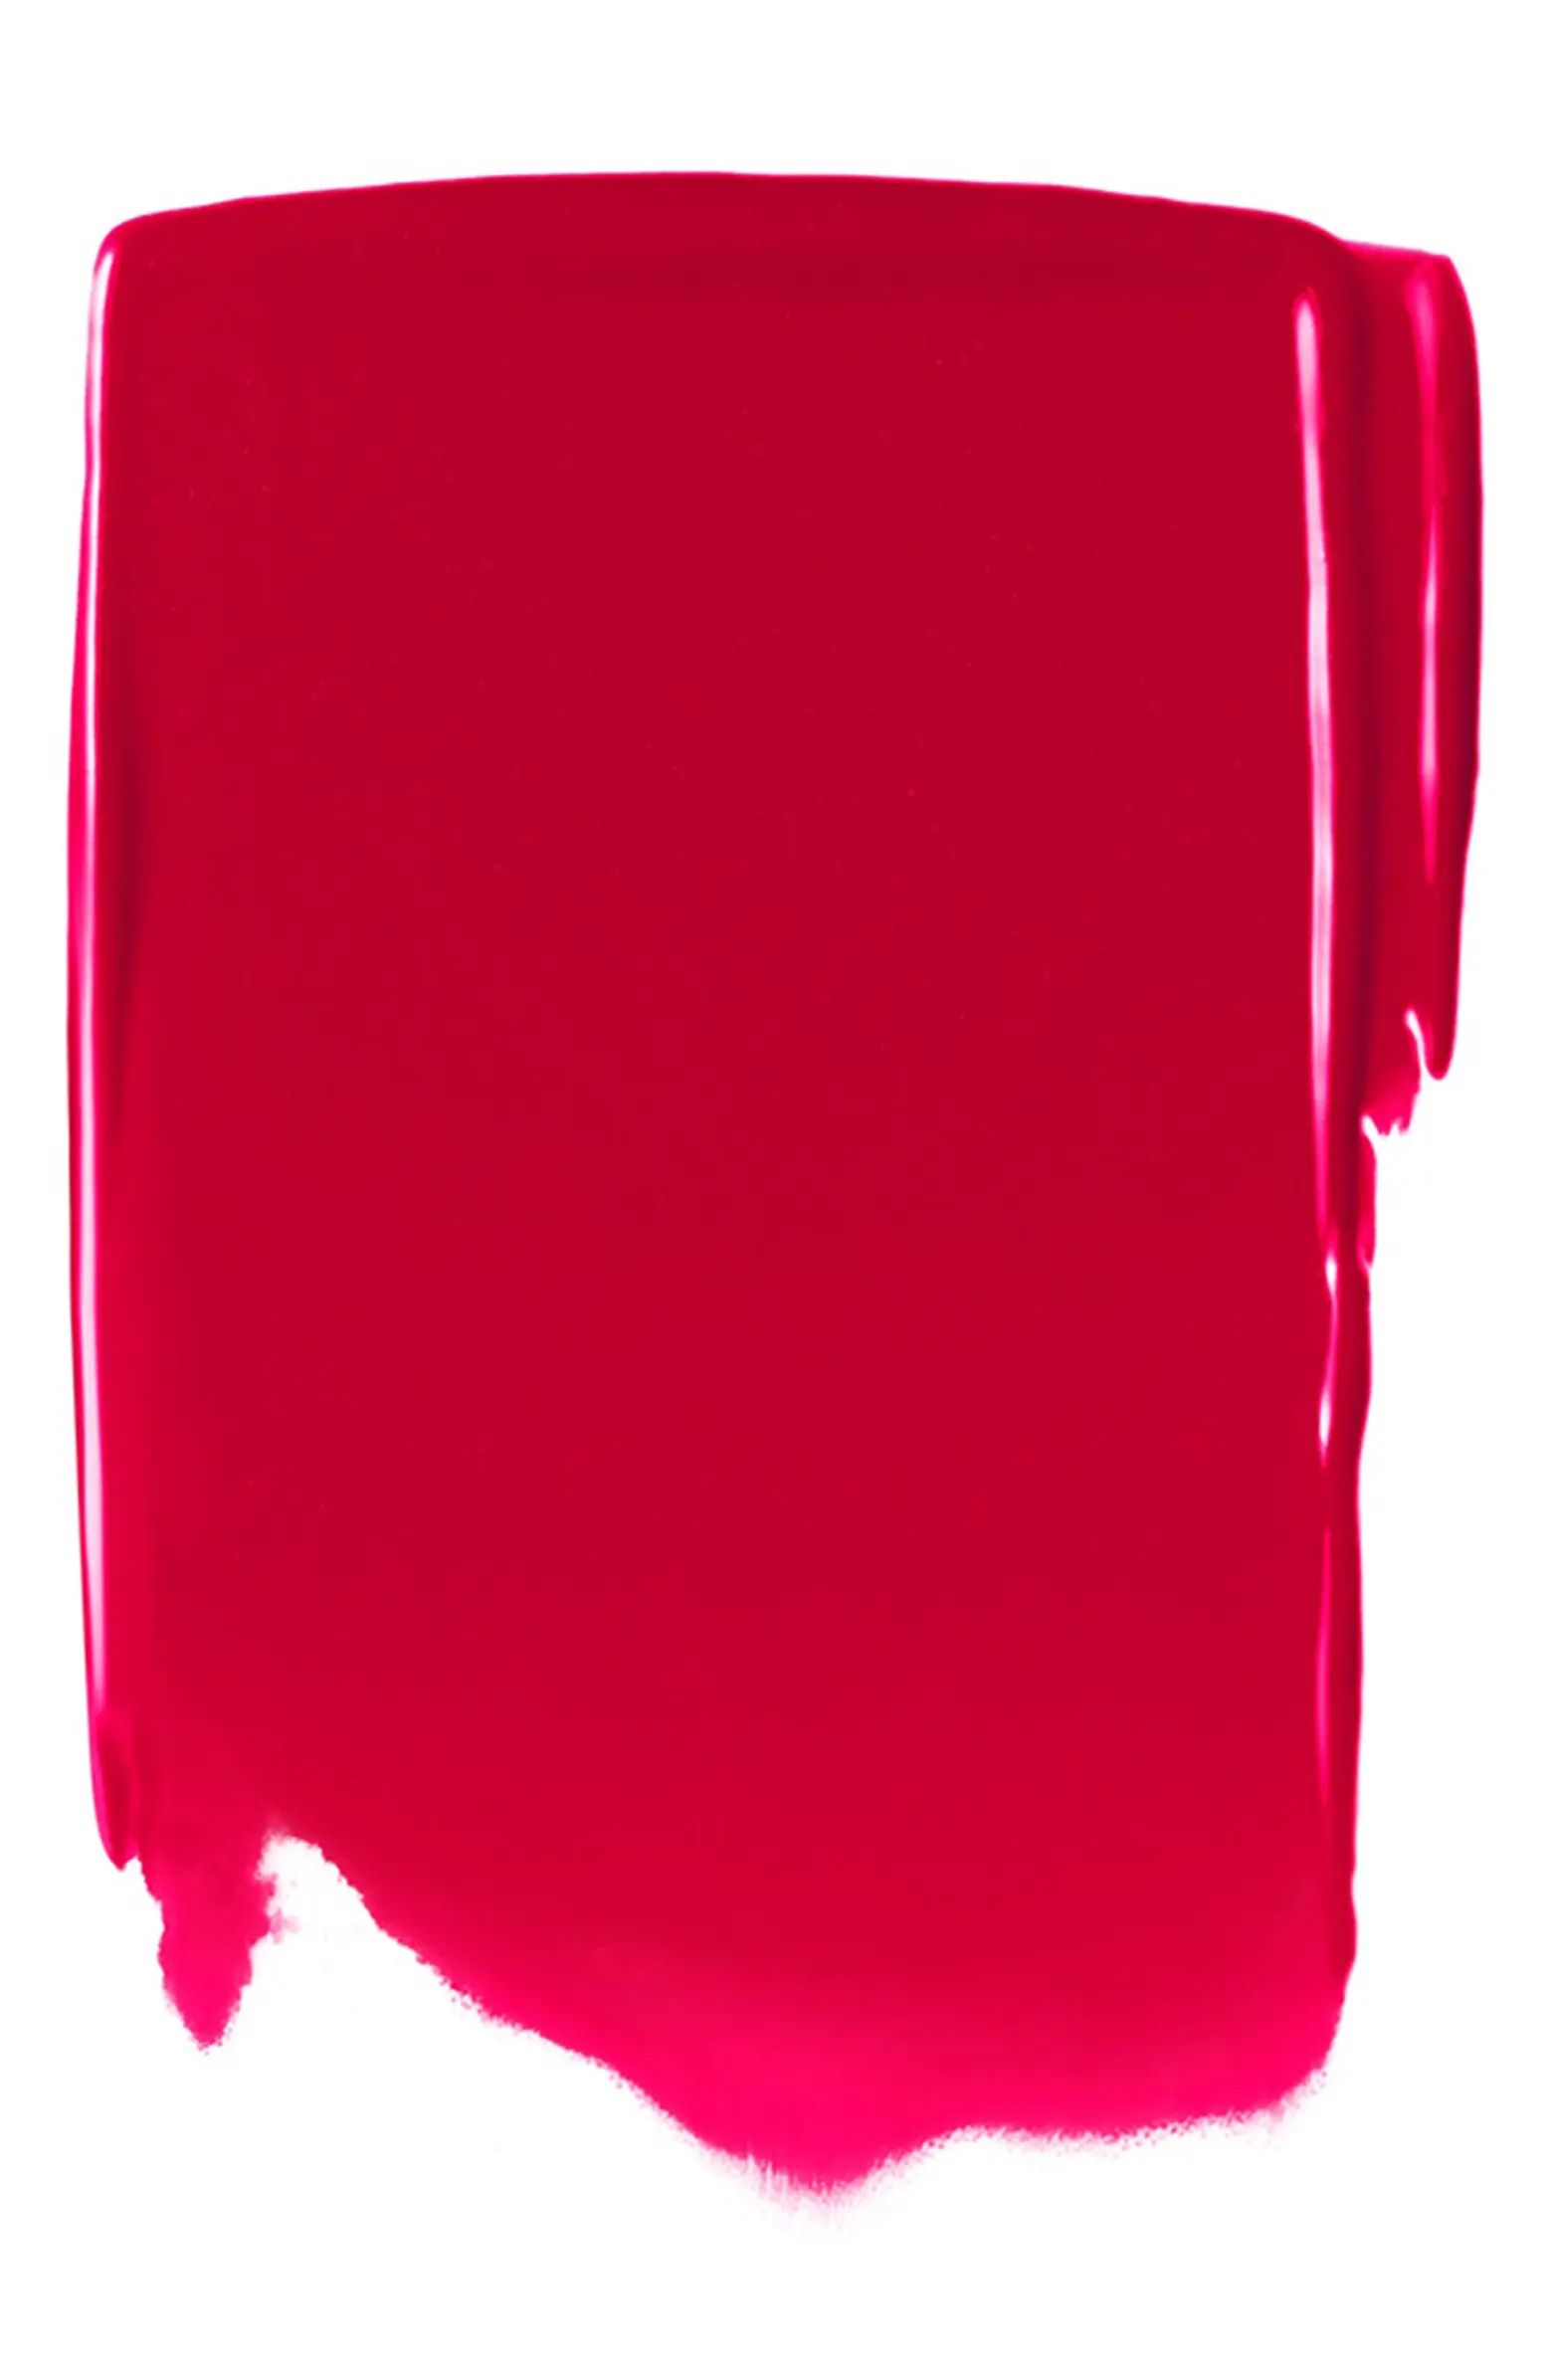 Powermatte Lip Pigment Liquid Lipstick | Nordstrom